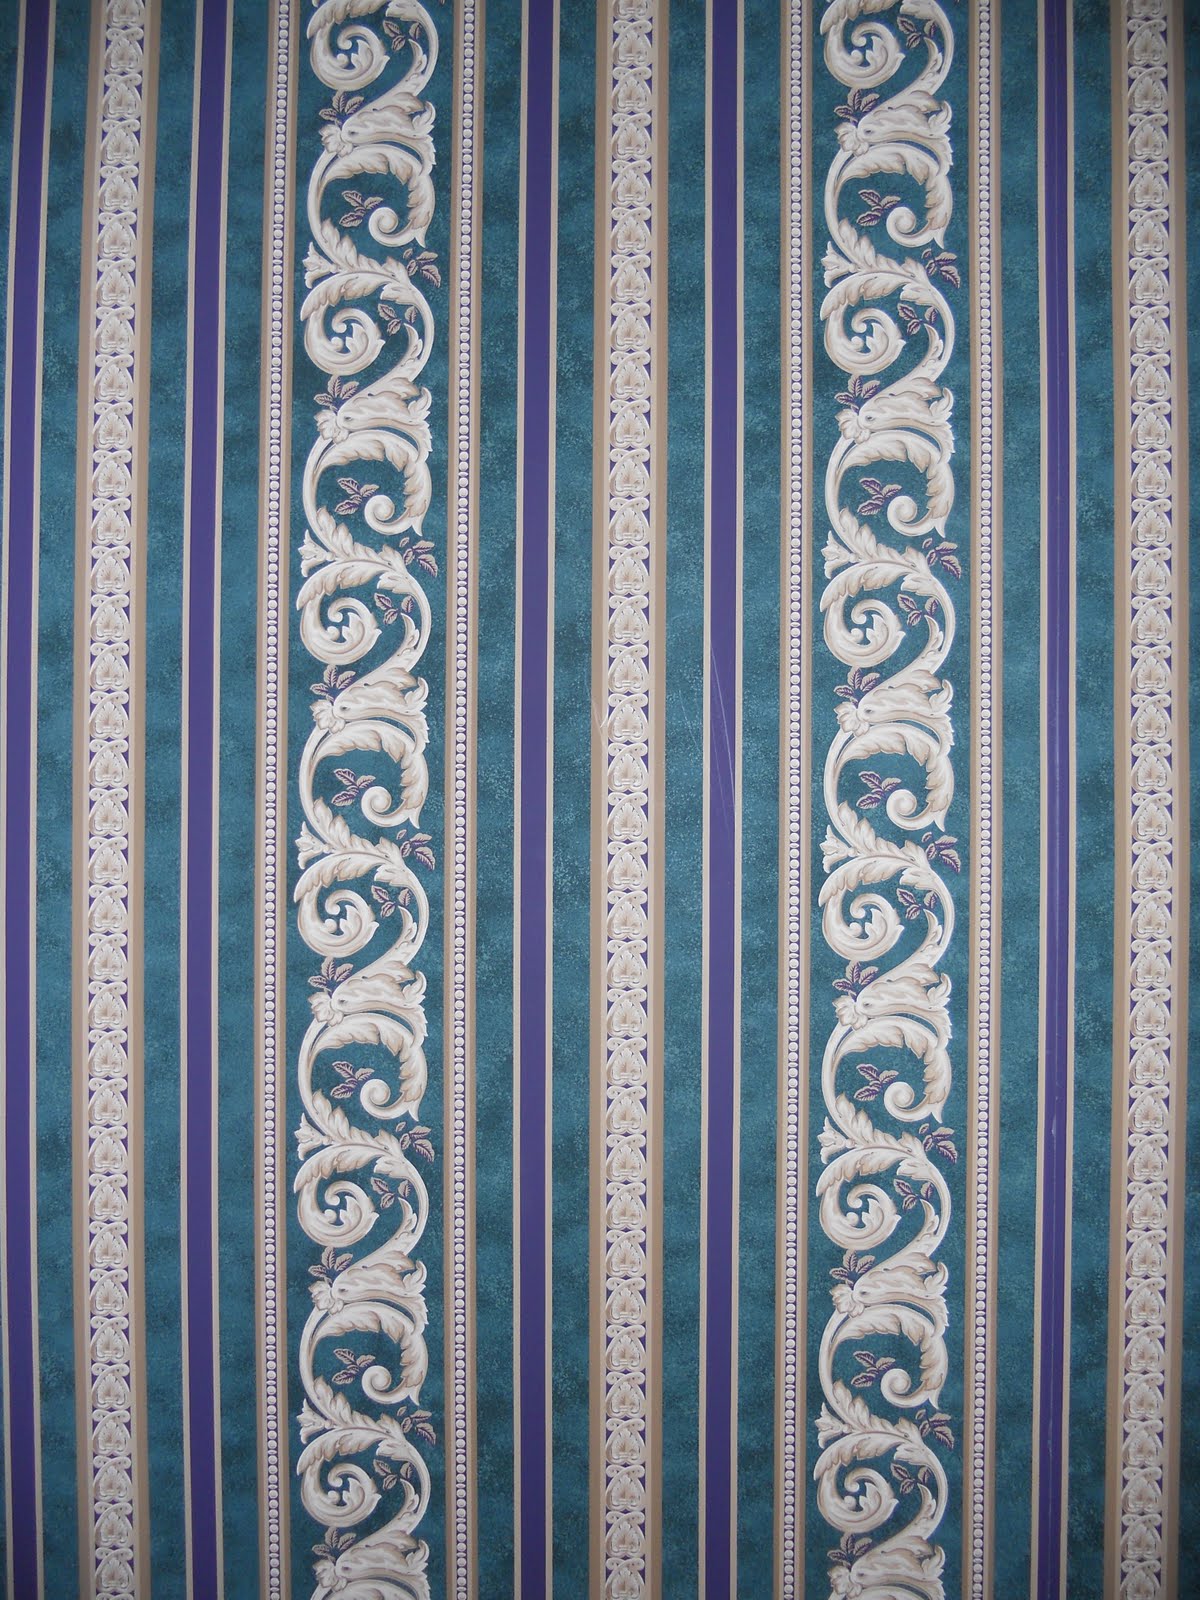 1910s Wallpaper Patterns This Pattern